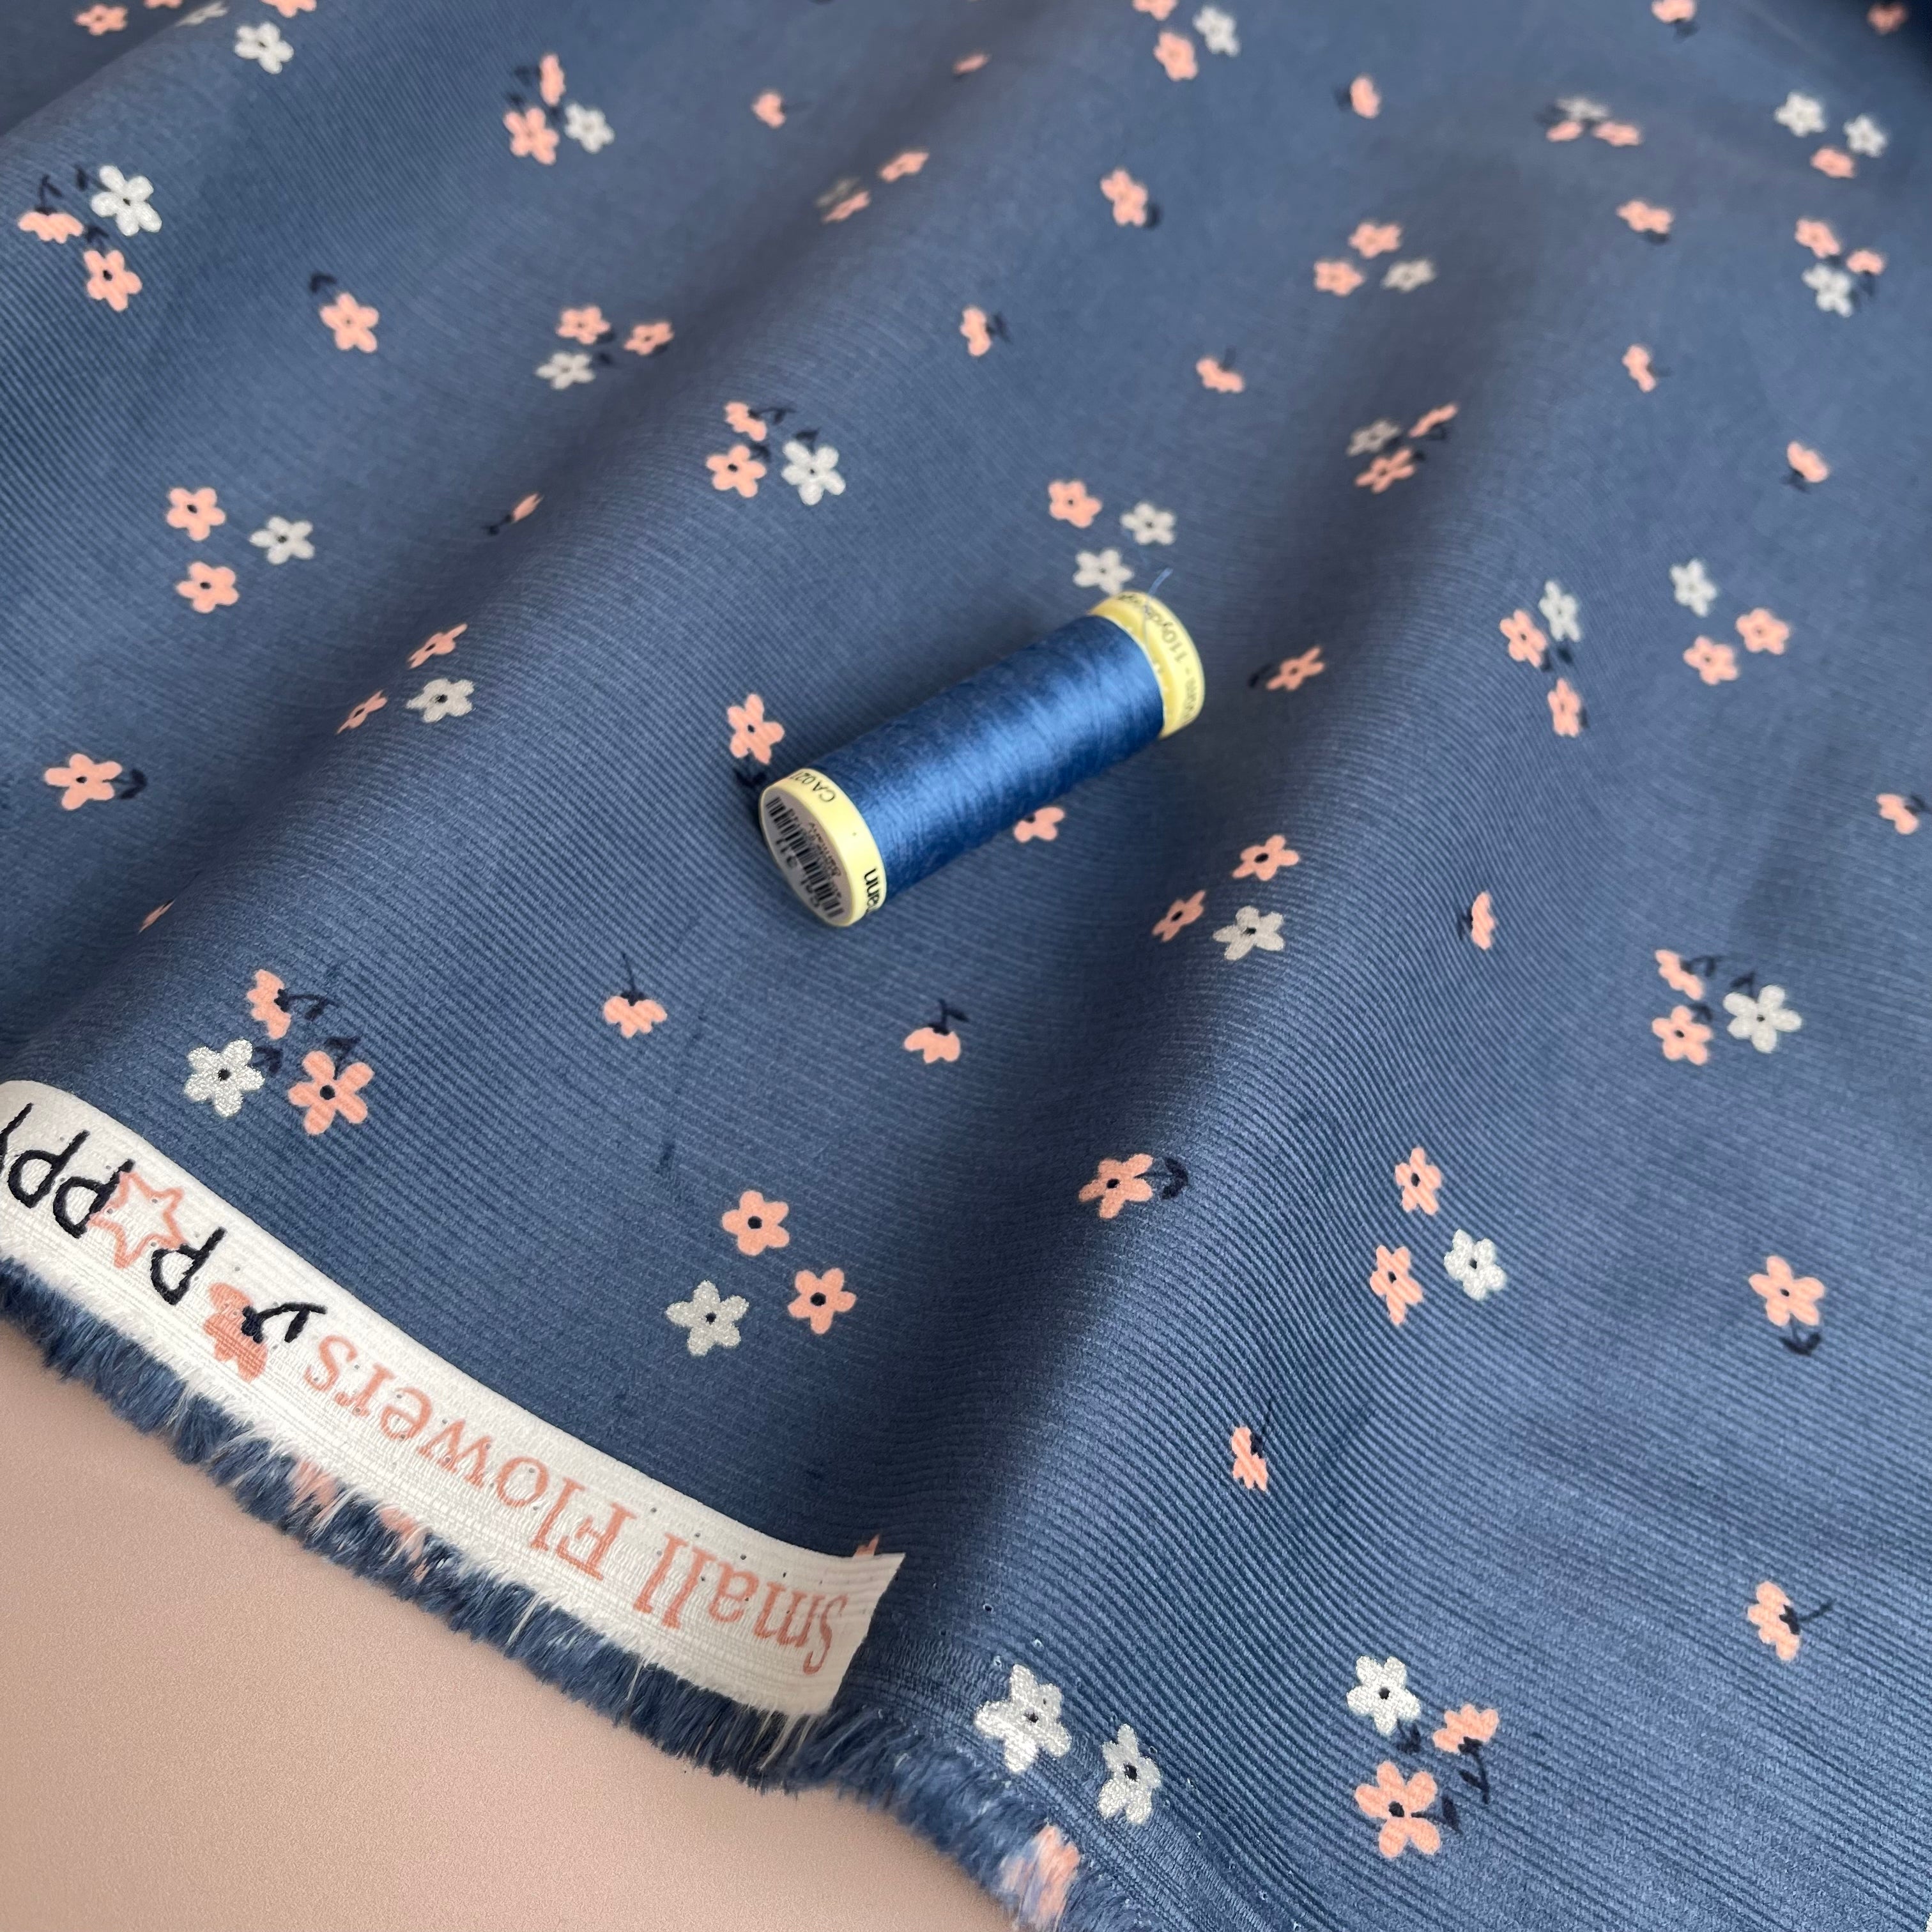 Small Flowers on Denim Blue Cotton Needlecord